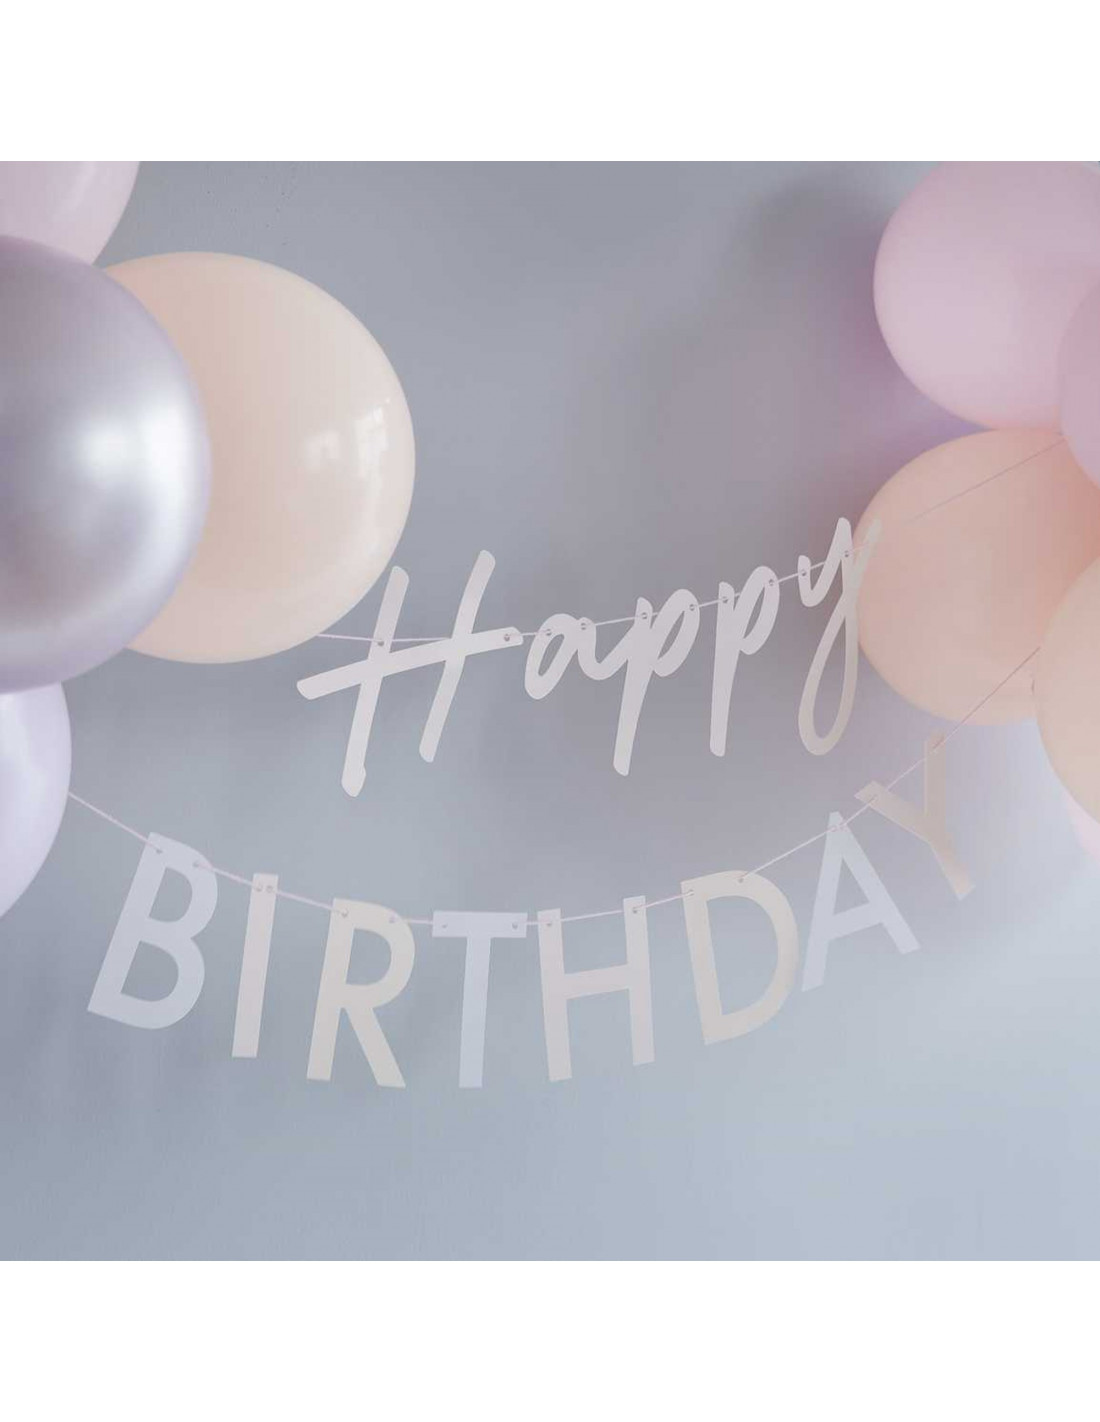 Guirlande Happy Birthday & Ballons Pastels - Les Bambetises